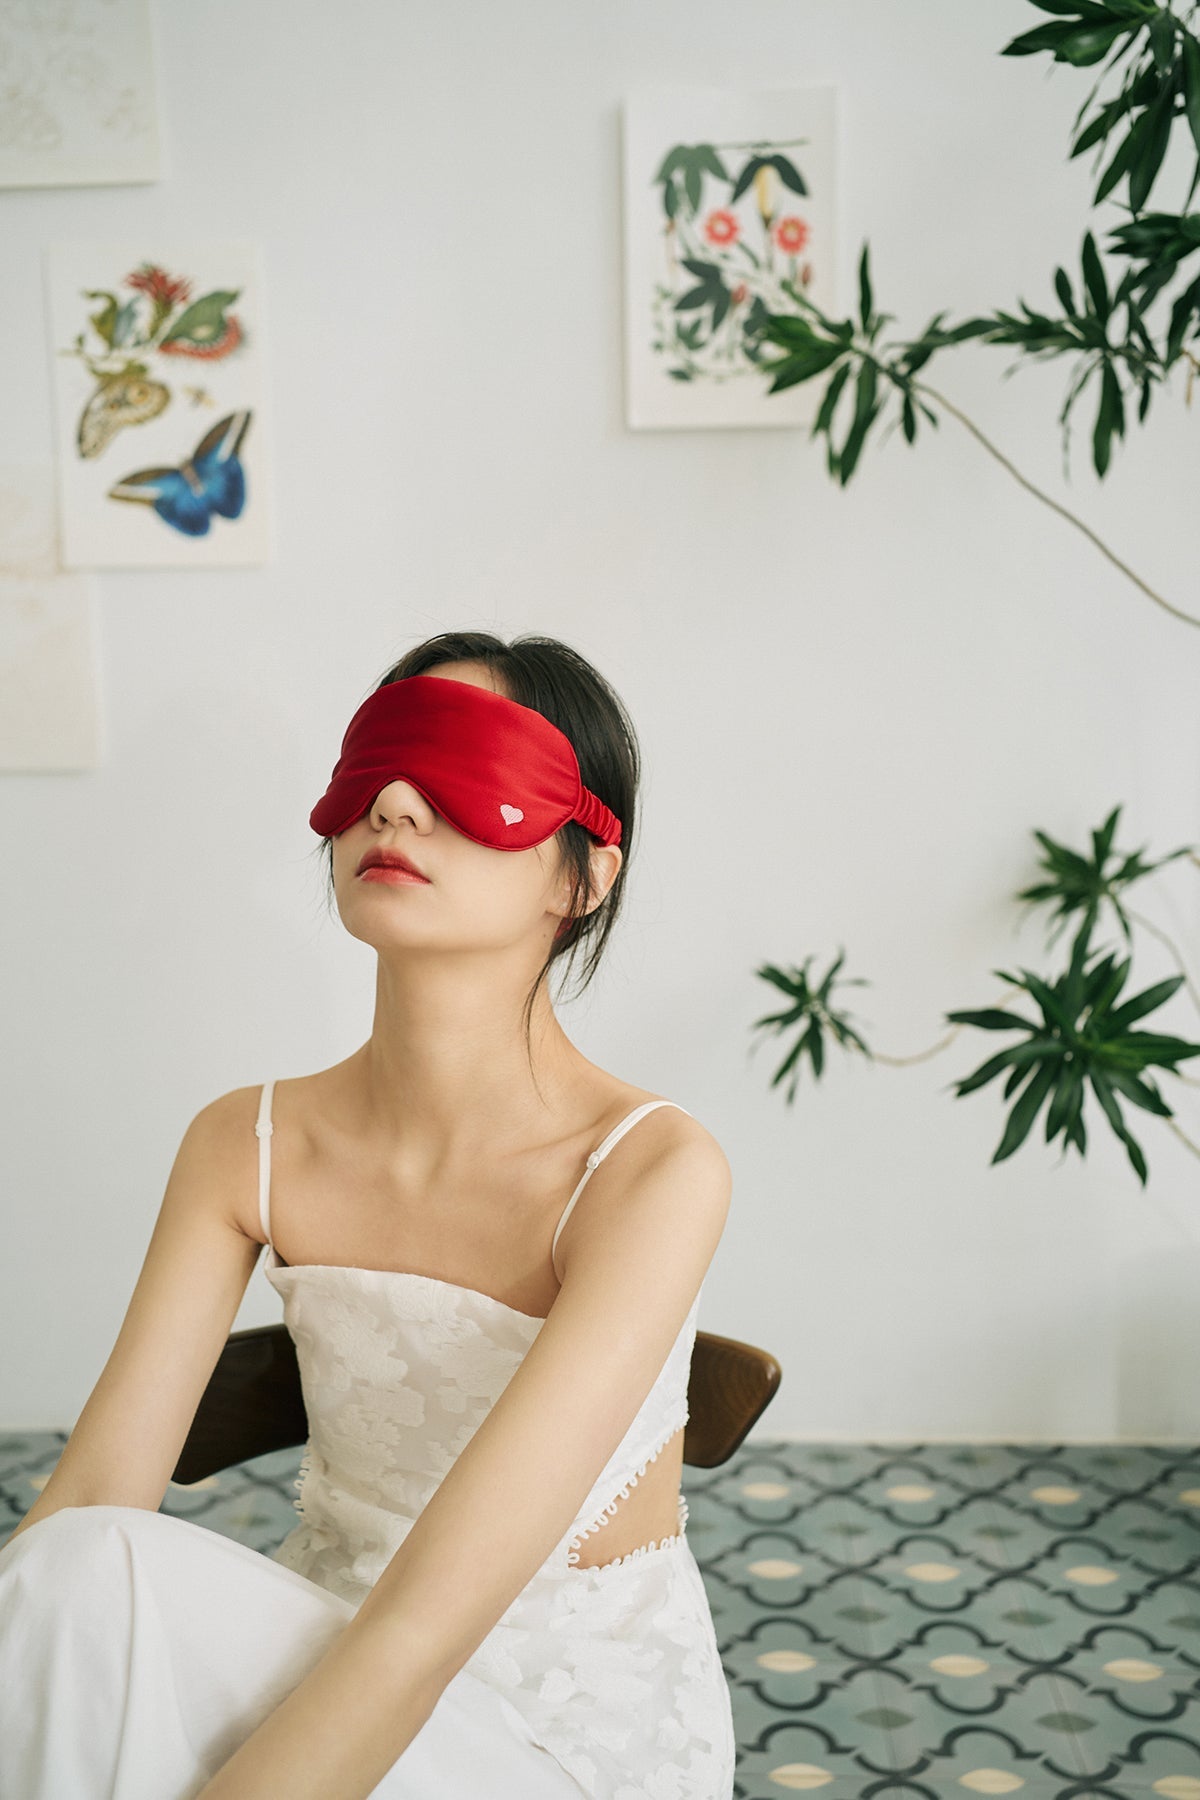 “Love Heart” Silk Sleep Eye Mask - Red - LOST PATTERN Eye Masks